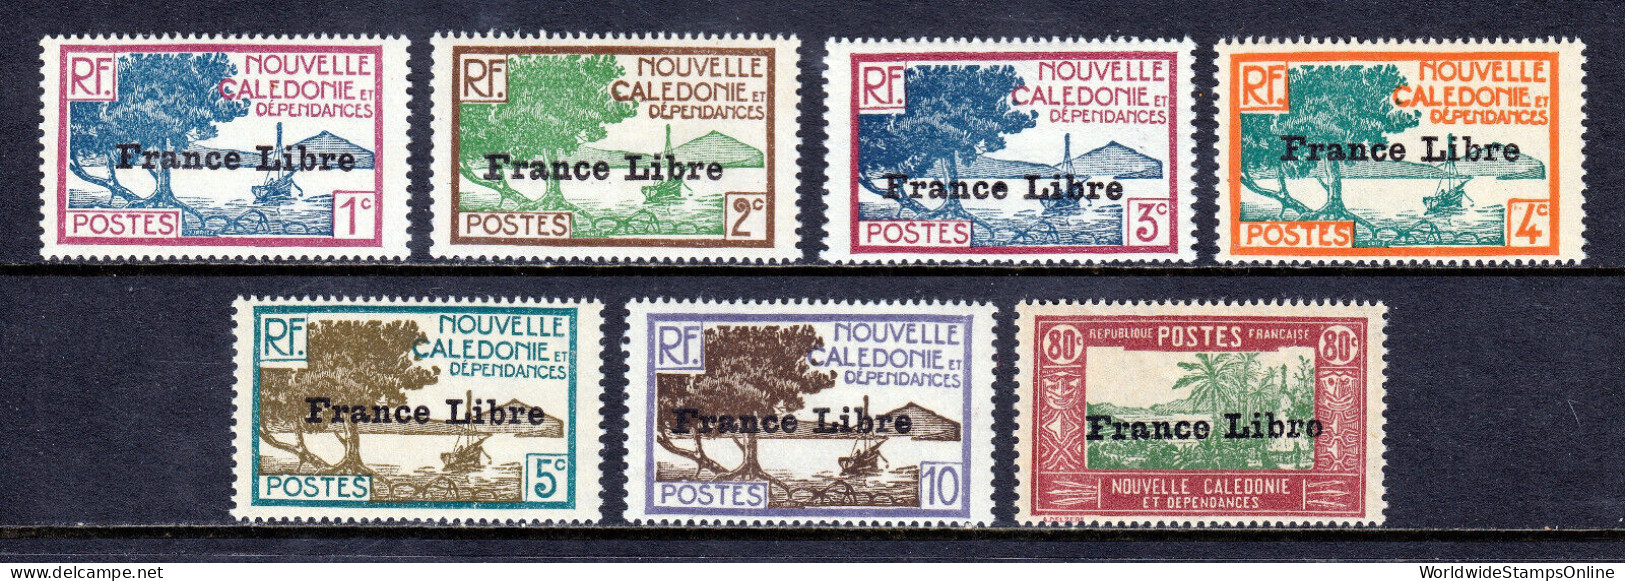 NEW CALEDONIA — SCOTT 217/236  — 1941 FRANCE LIBRE ISSUE — MH — SCV $99 - Neufs